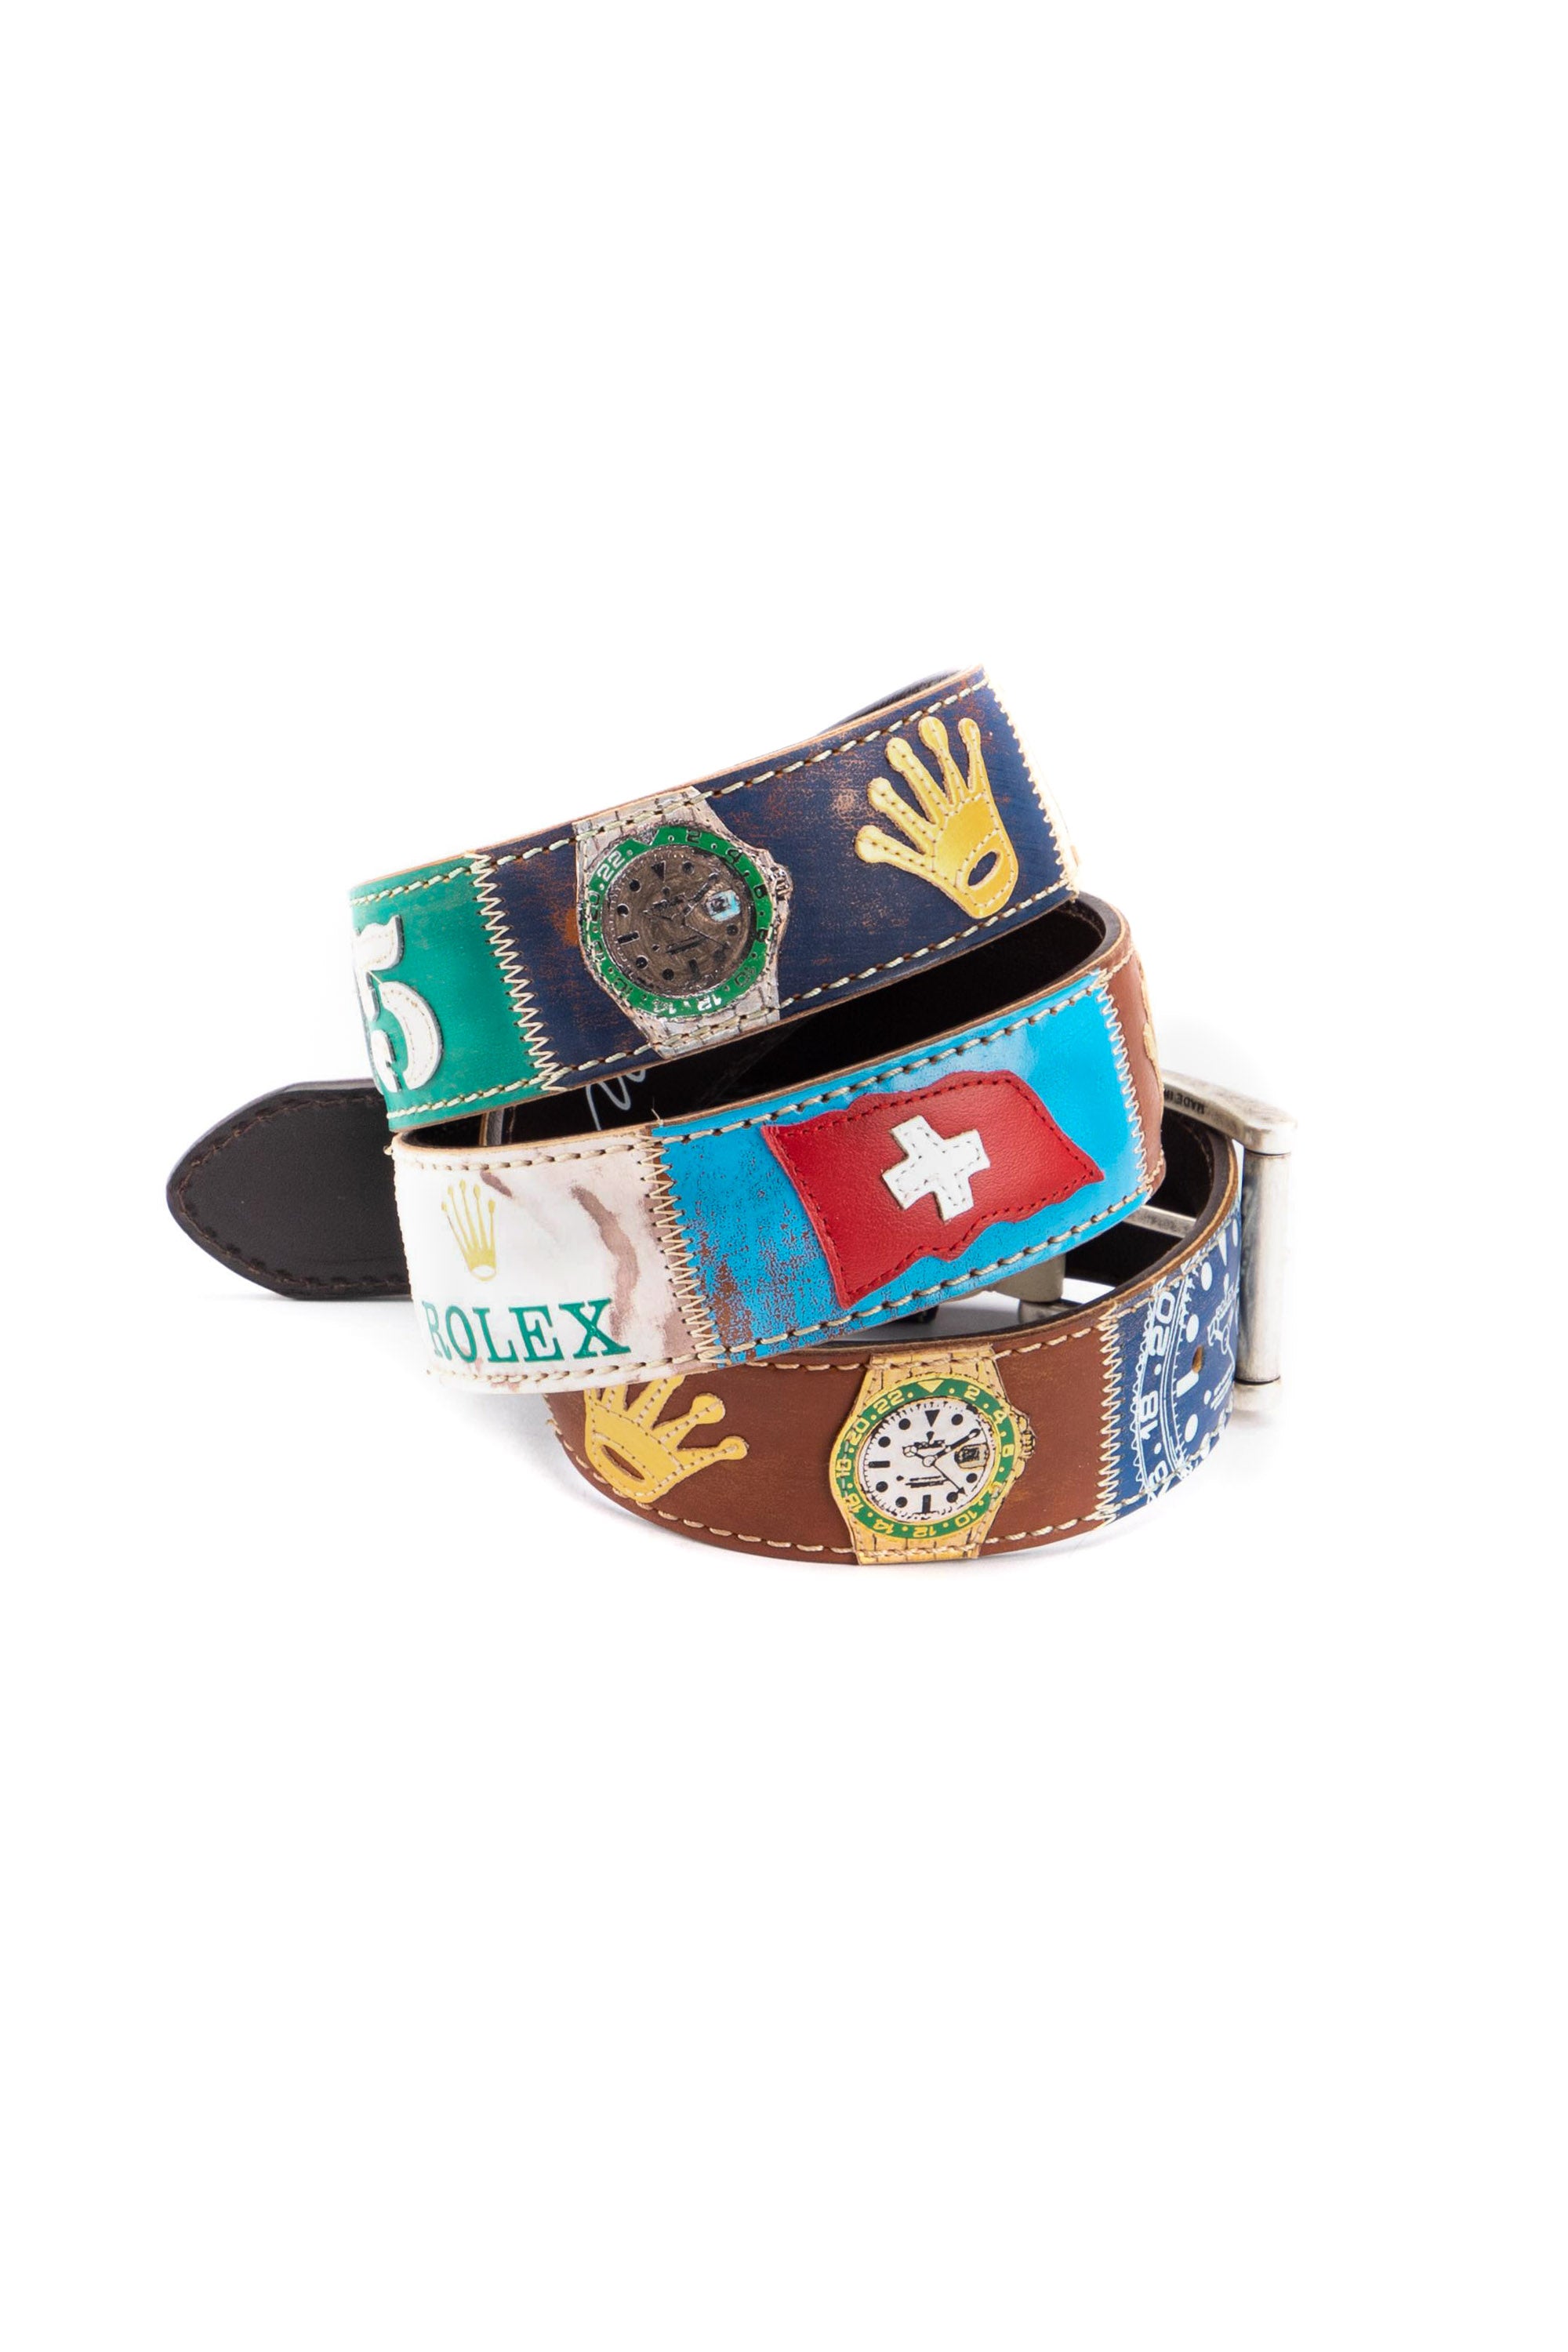 Rolex handcrafted belt